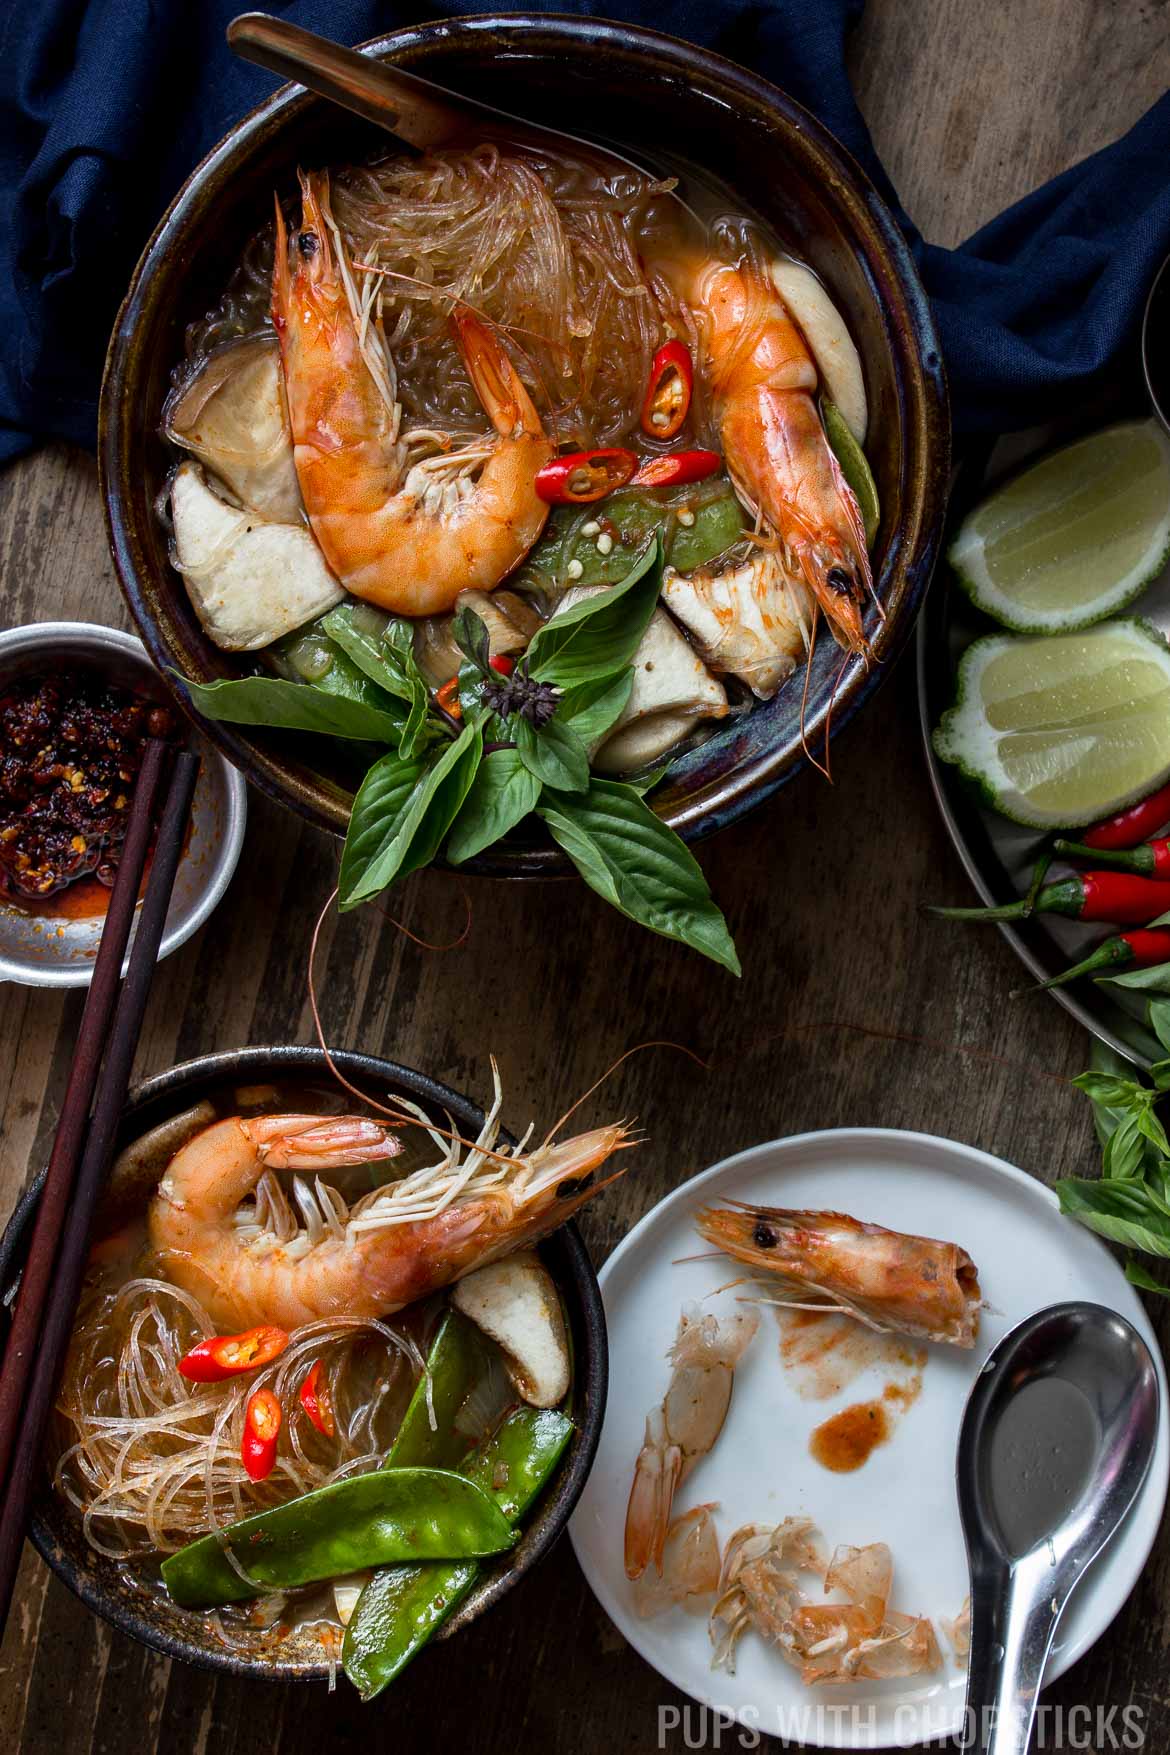 Tom Yum Goong (Thai Hot & Sour Soup with Shrimp)